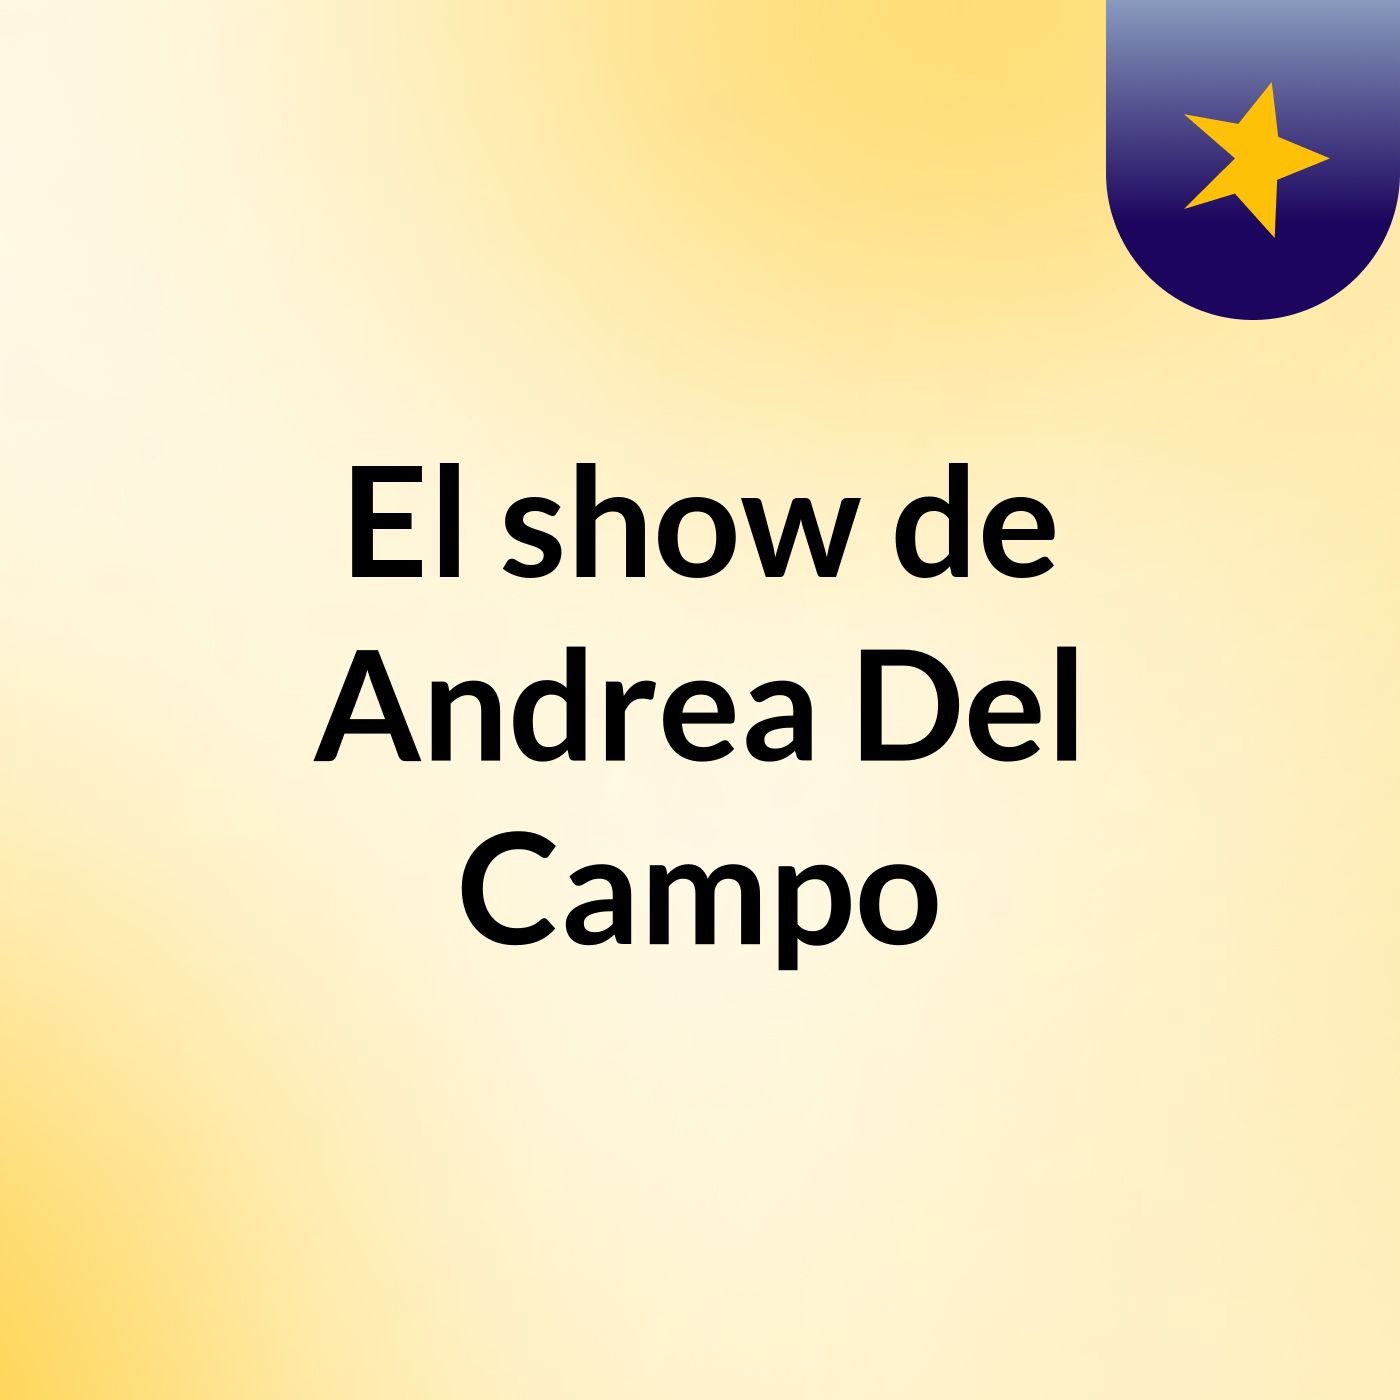 El show de Andrea Del Campo